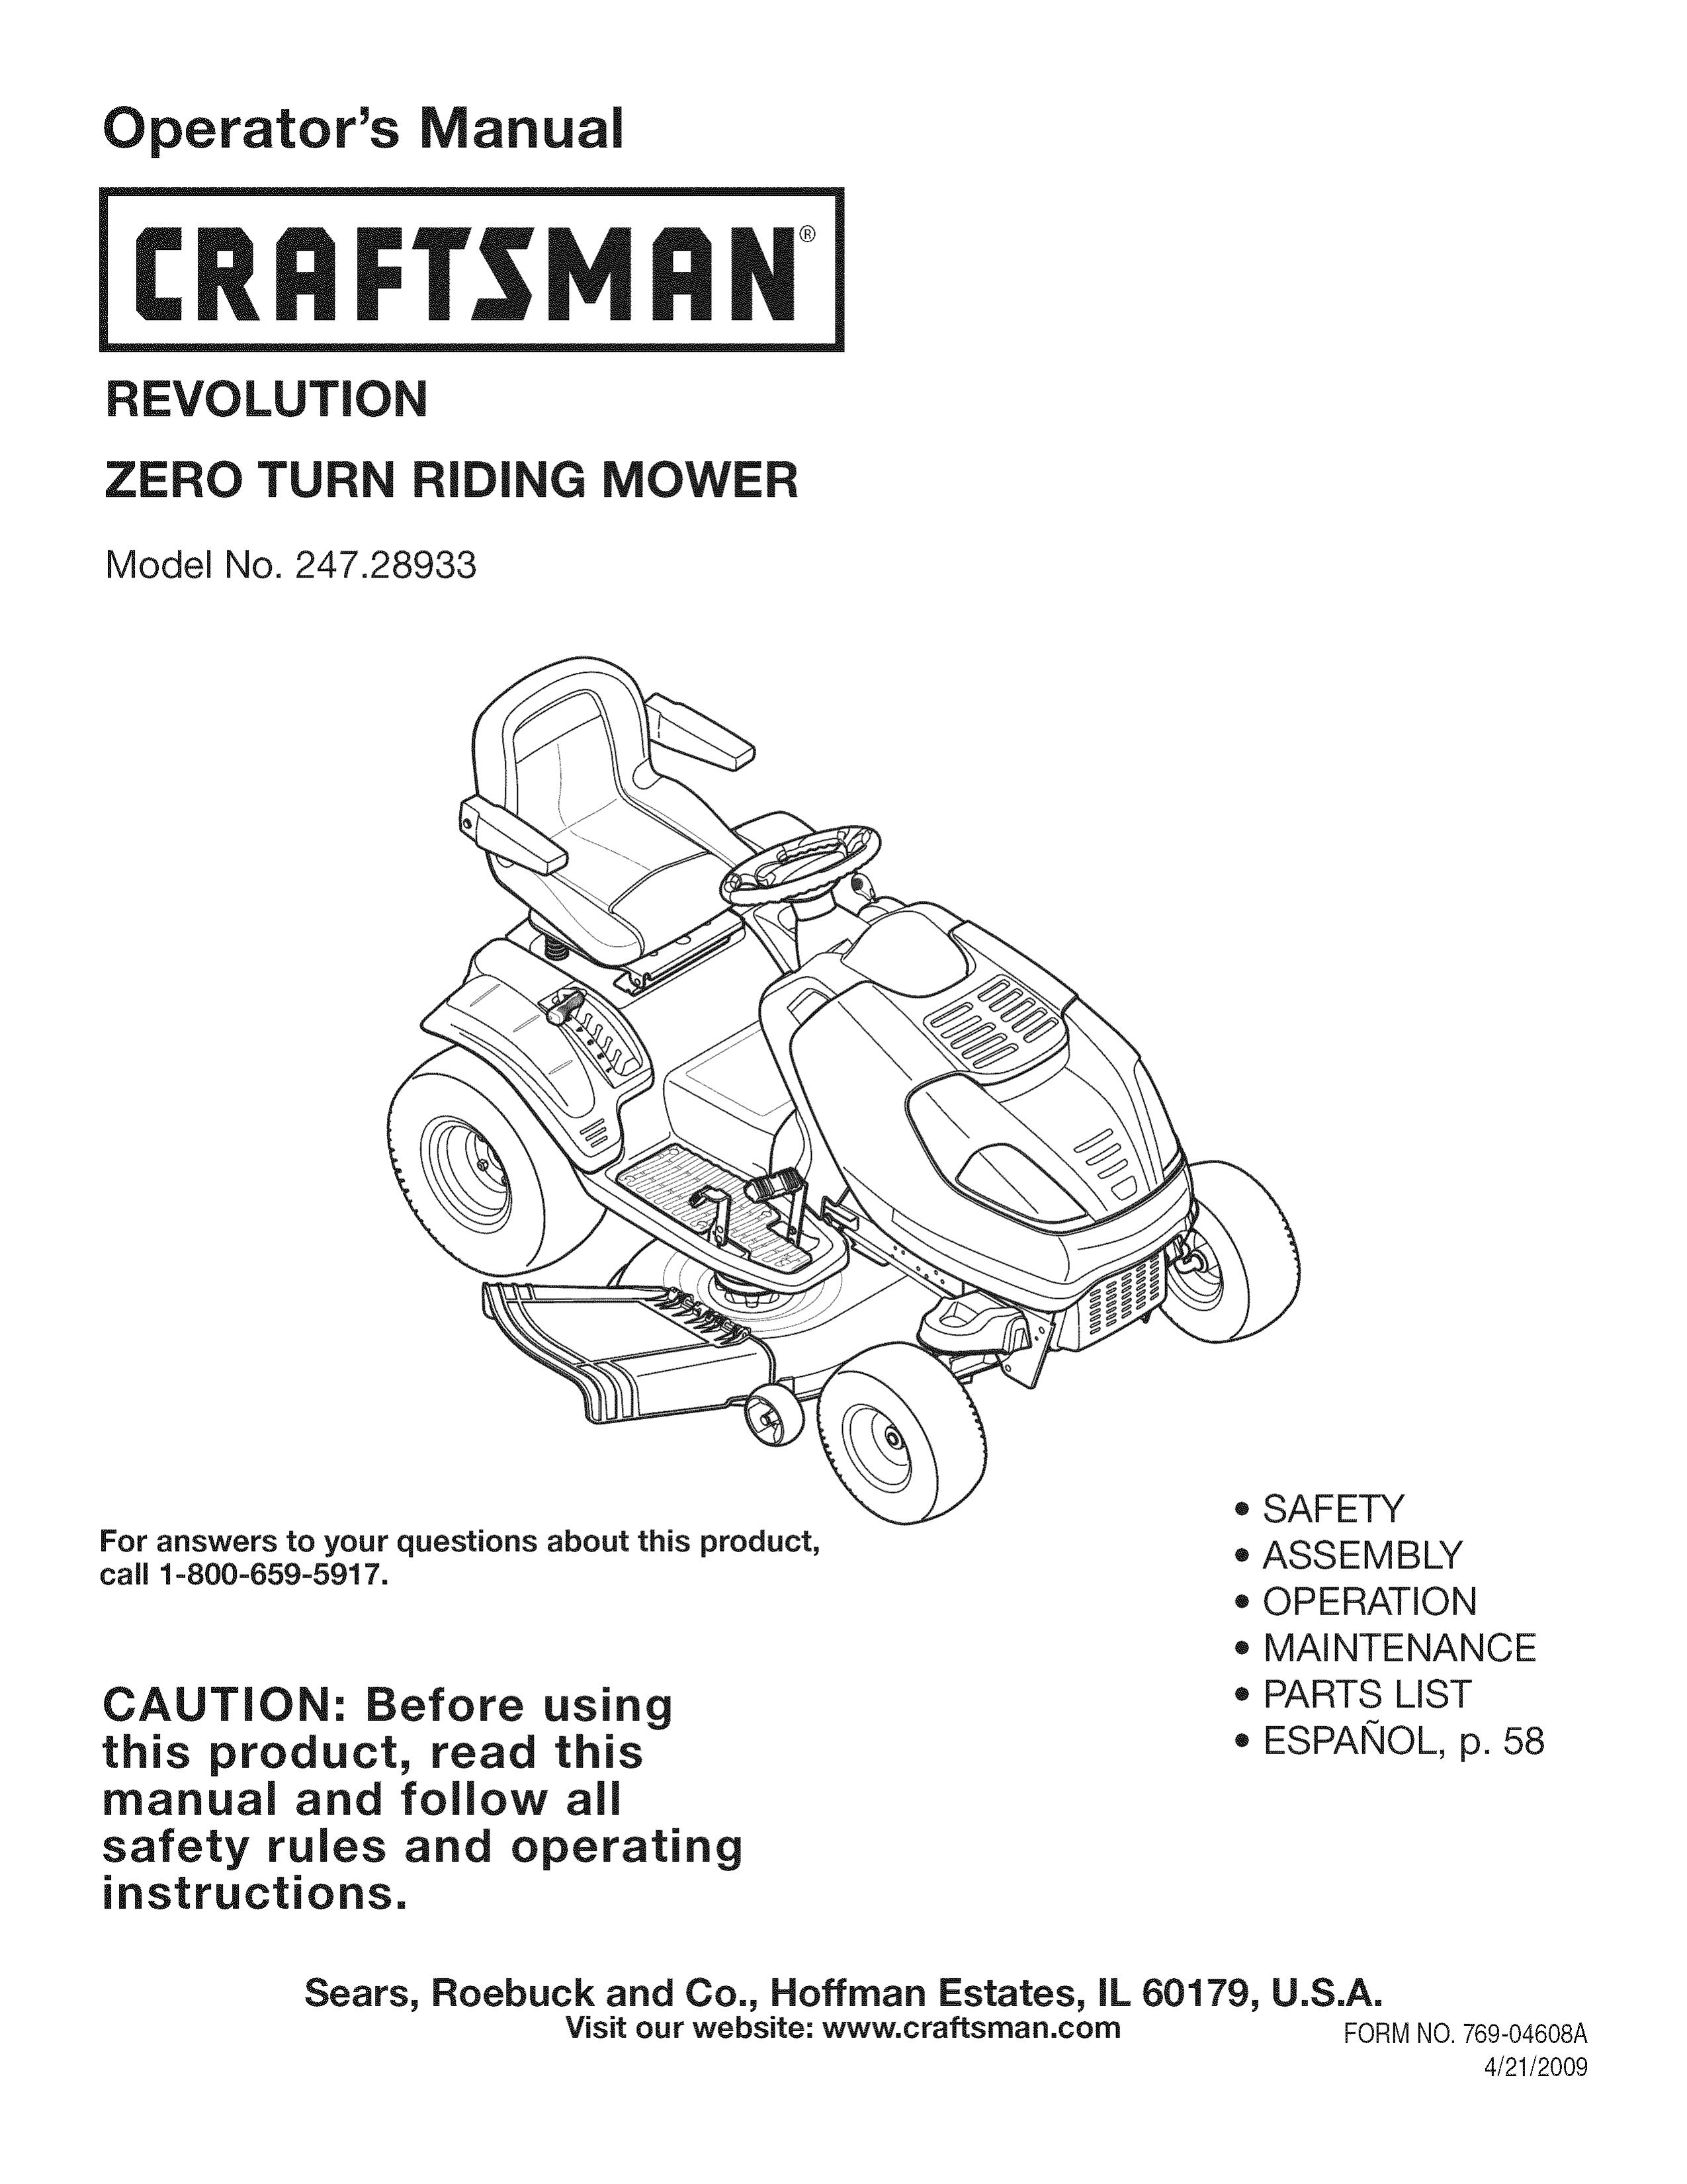 Craftsman 247.28933 Lawn Mower User Manual